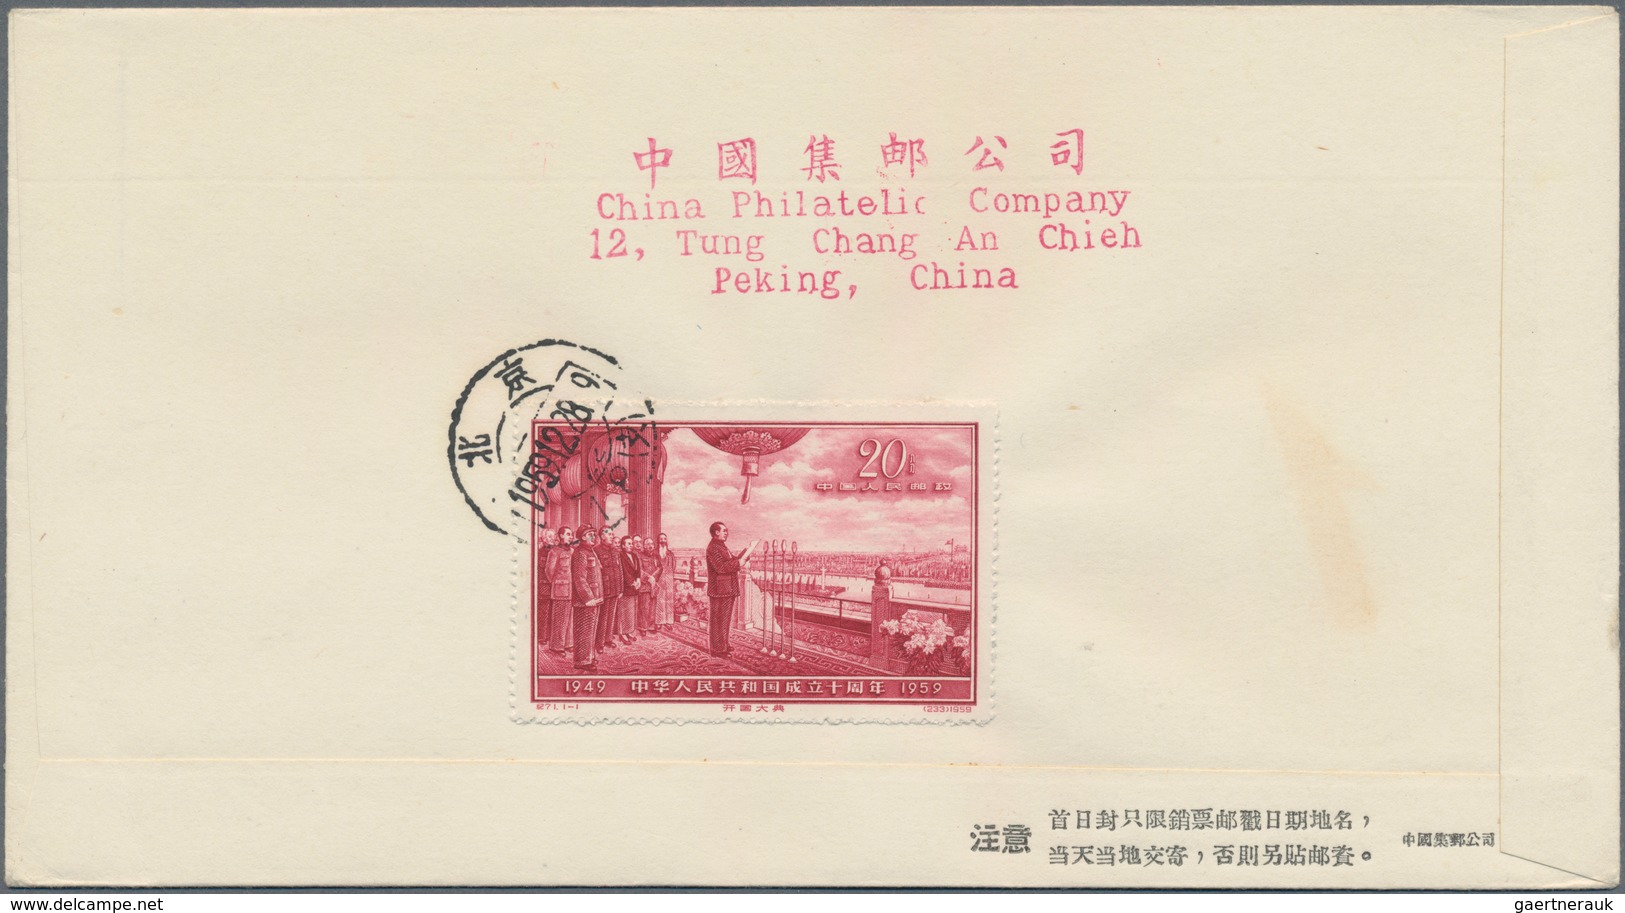 China - Volksrepublik: 1959, set of 4 FDCs addressed to Hamburg, Germany, bearing the full set of th